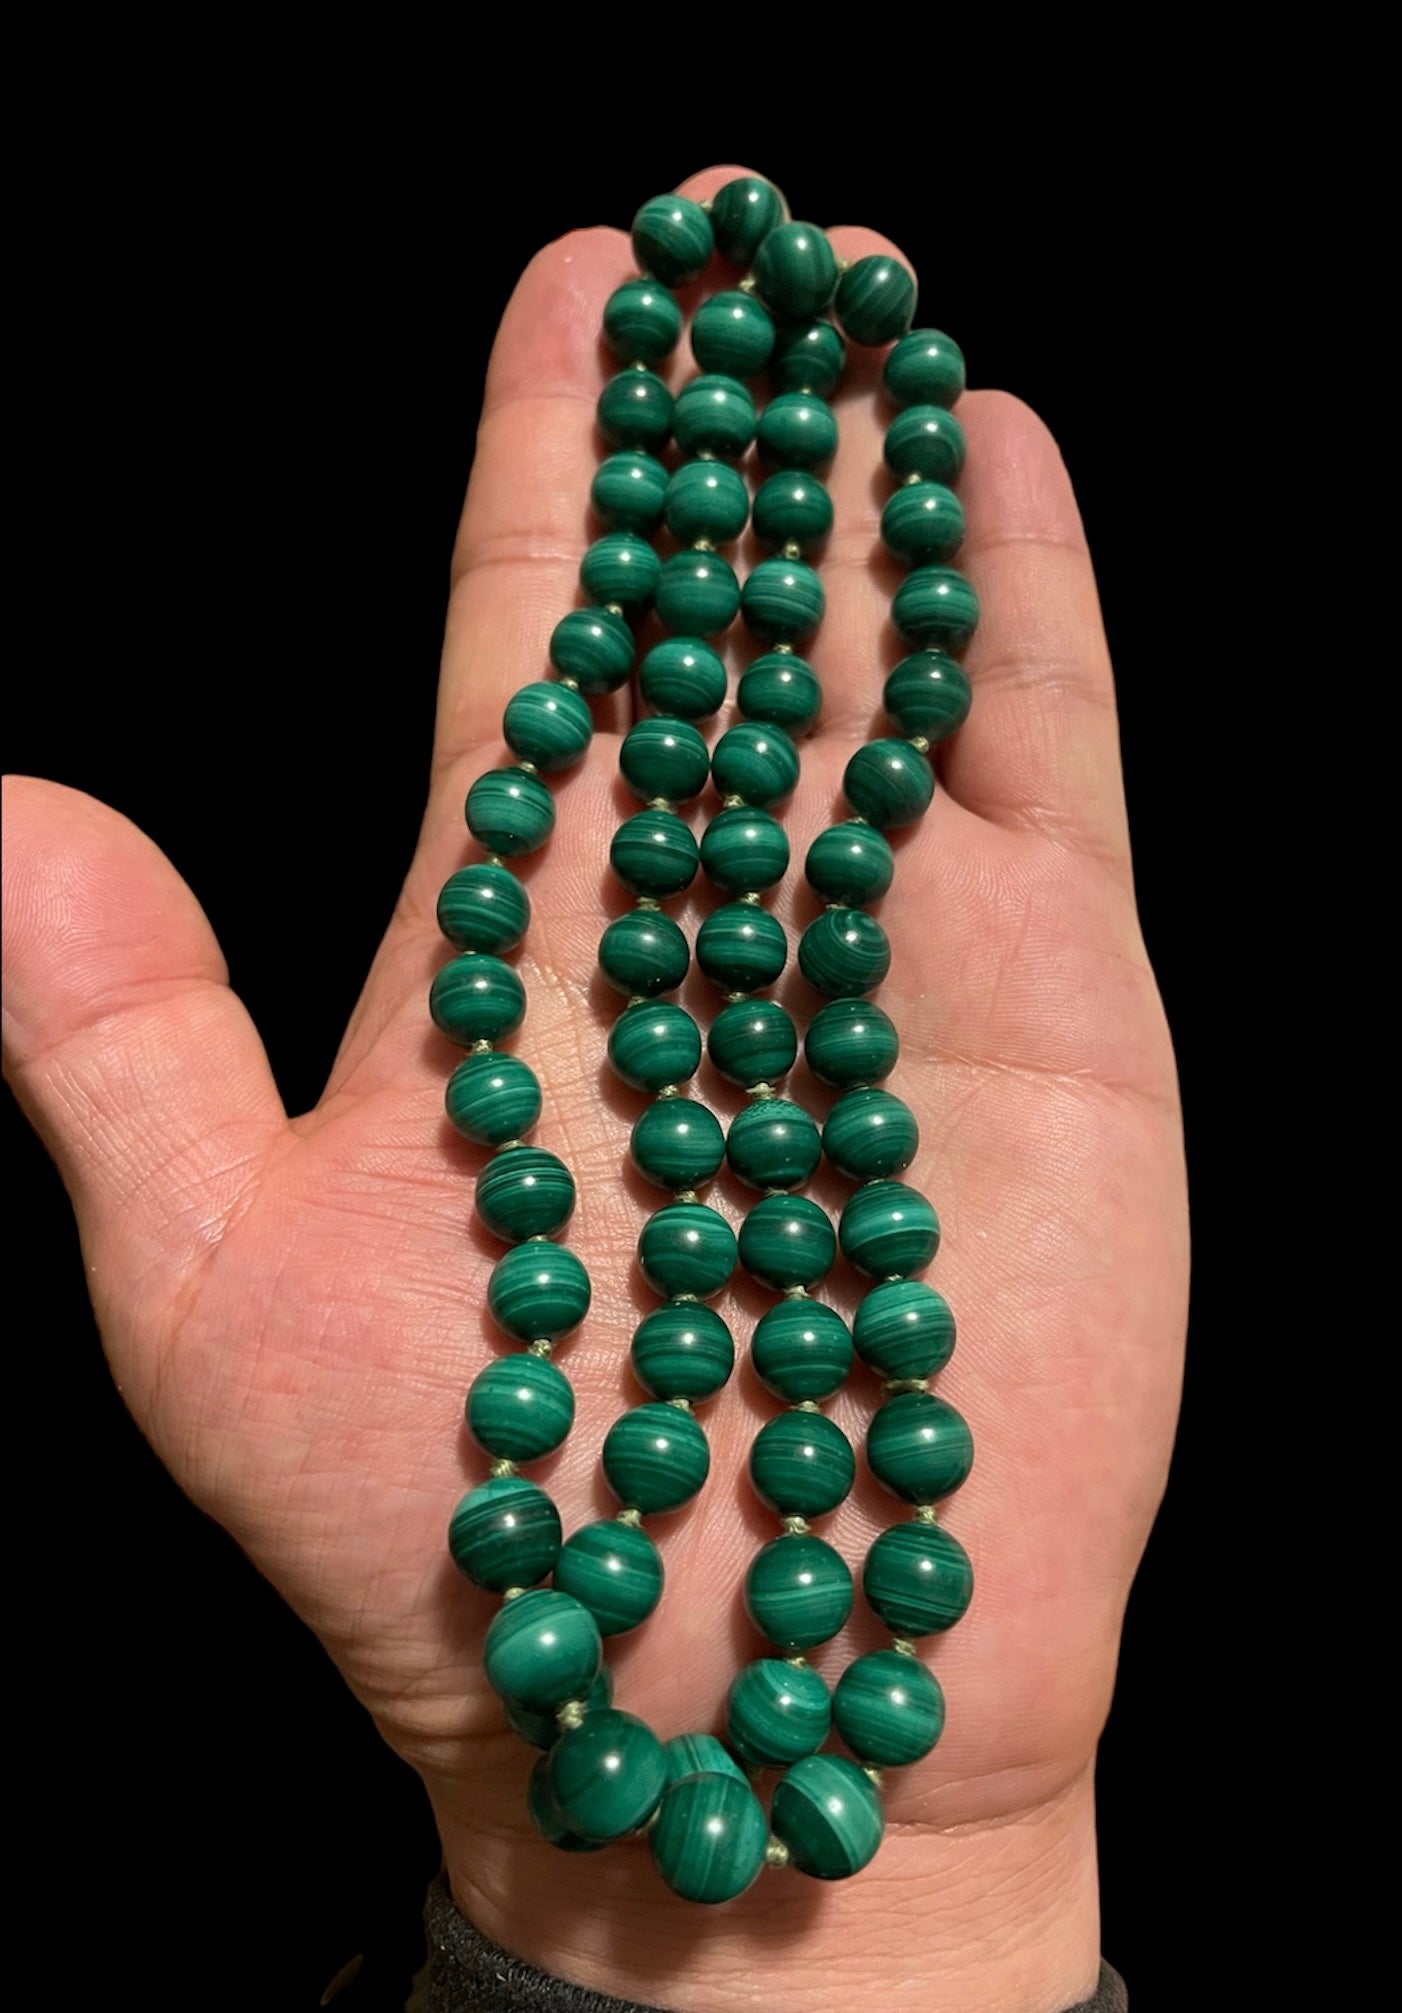 A vintage malachite necklace